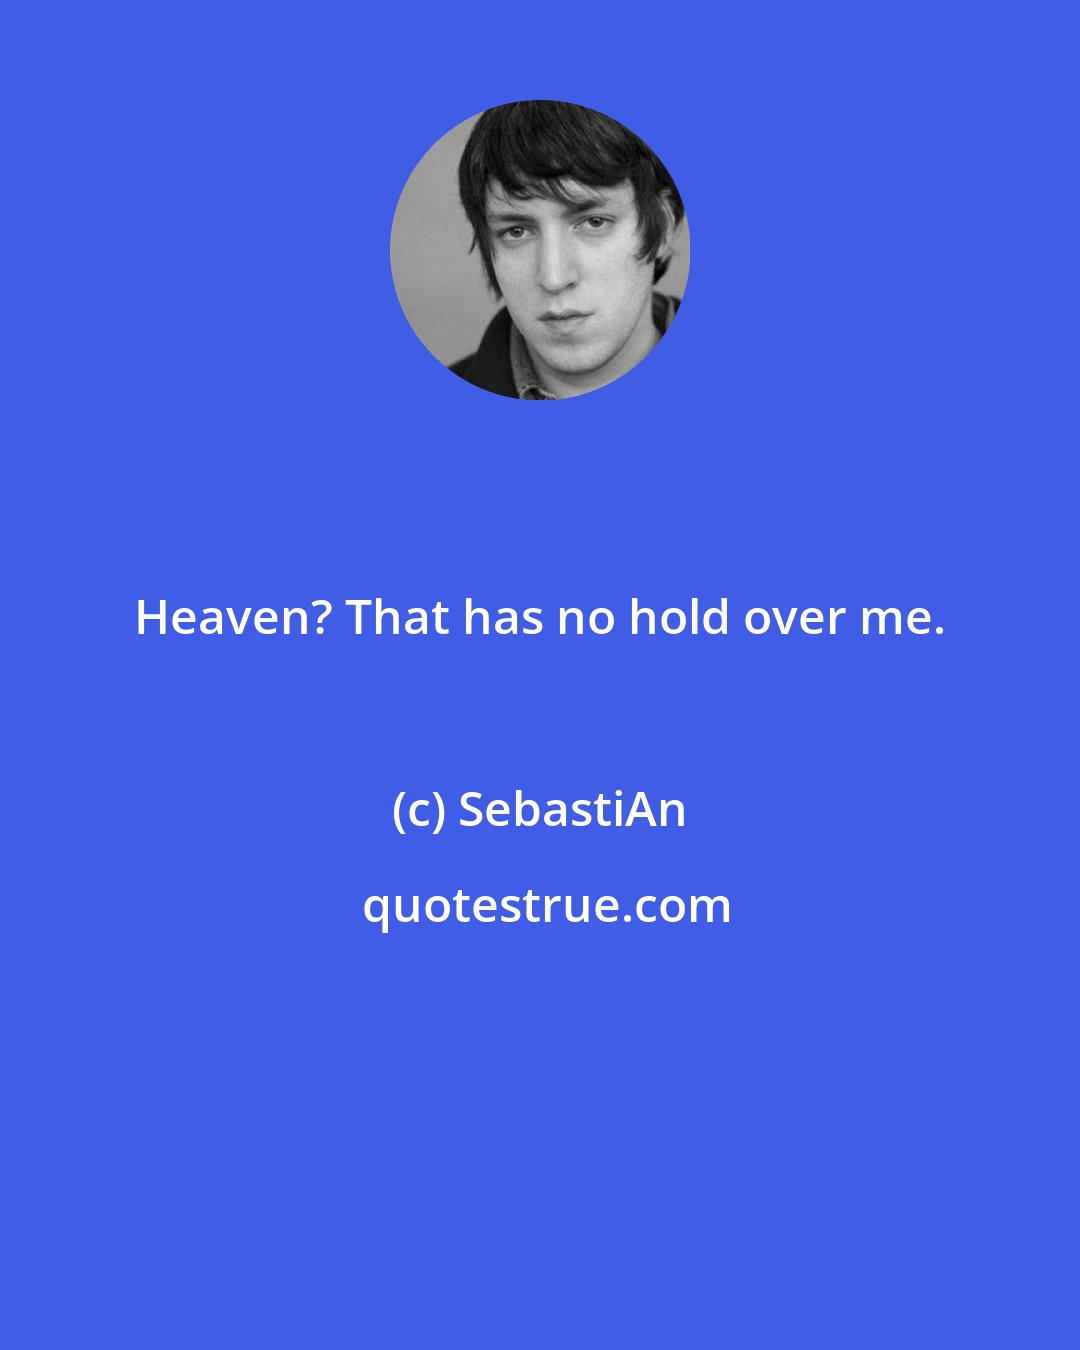 SebastiAn: Heaven? That has no hold over me.